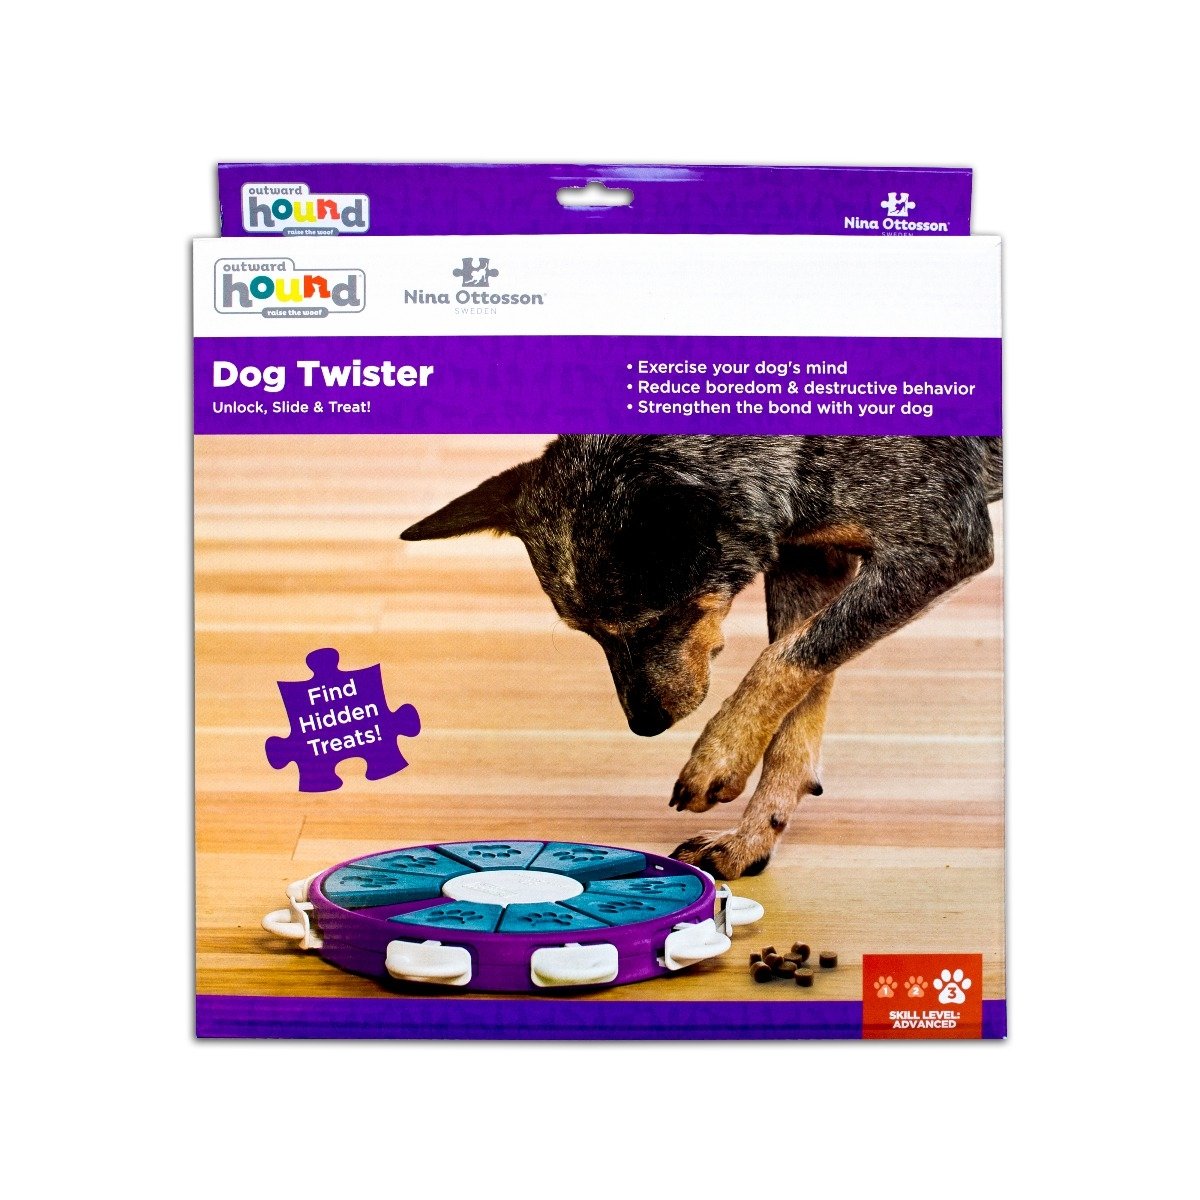 Outward Hound Puppy Smart Interactive Treat Puzzle Blue Dog Toy